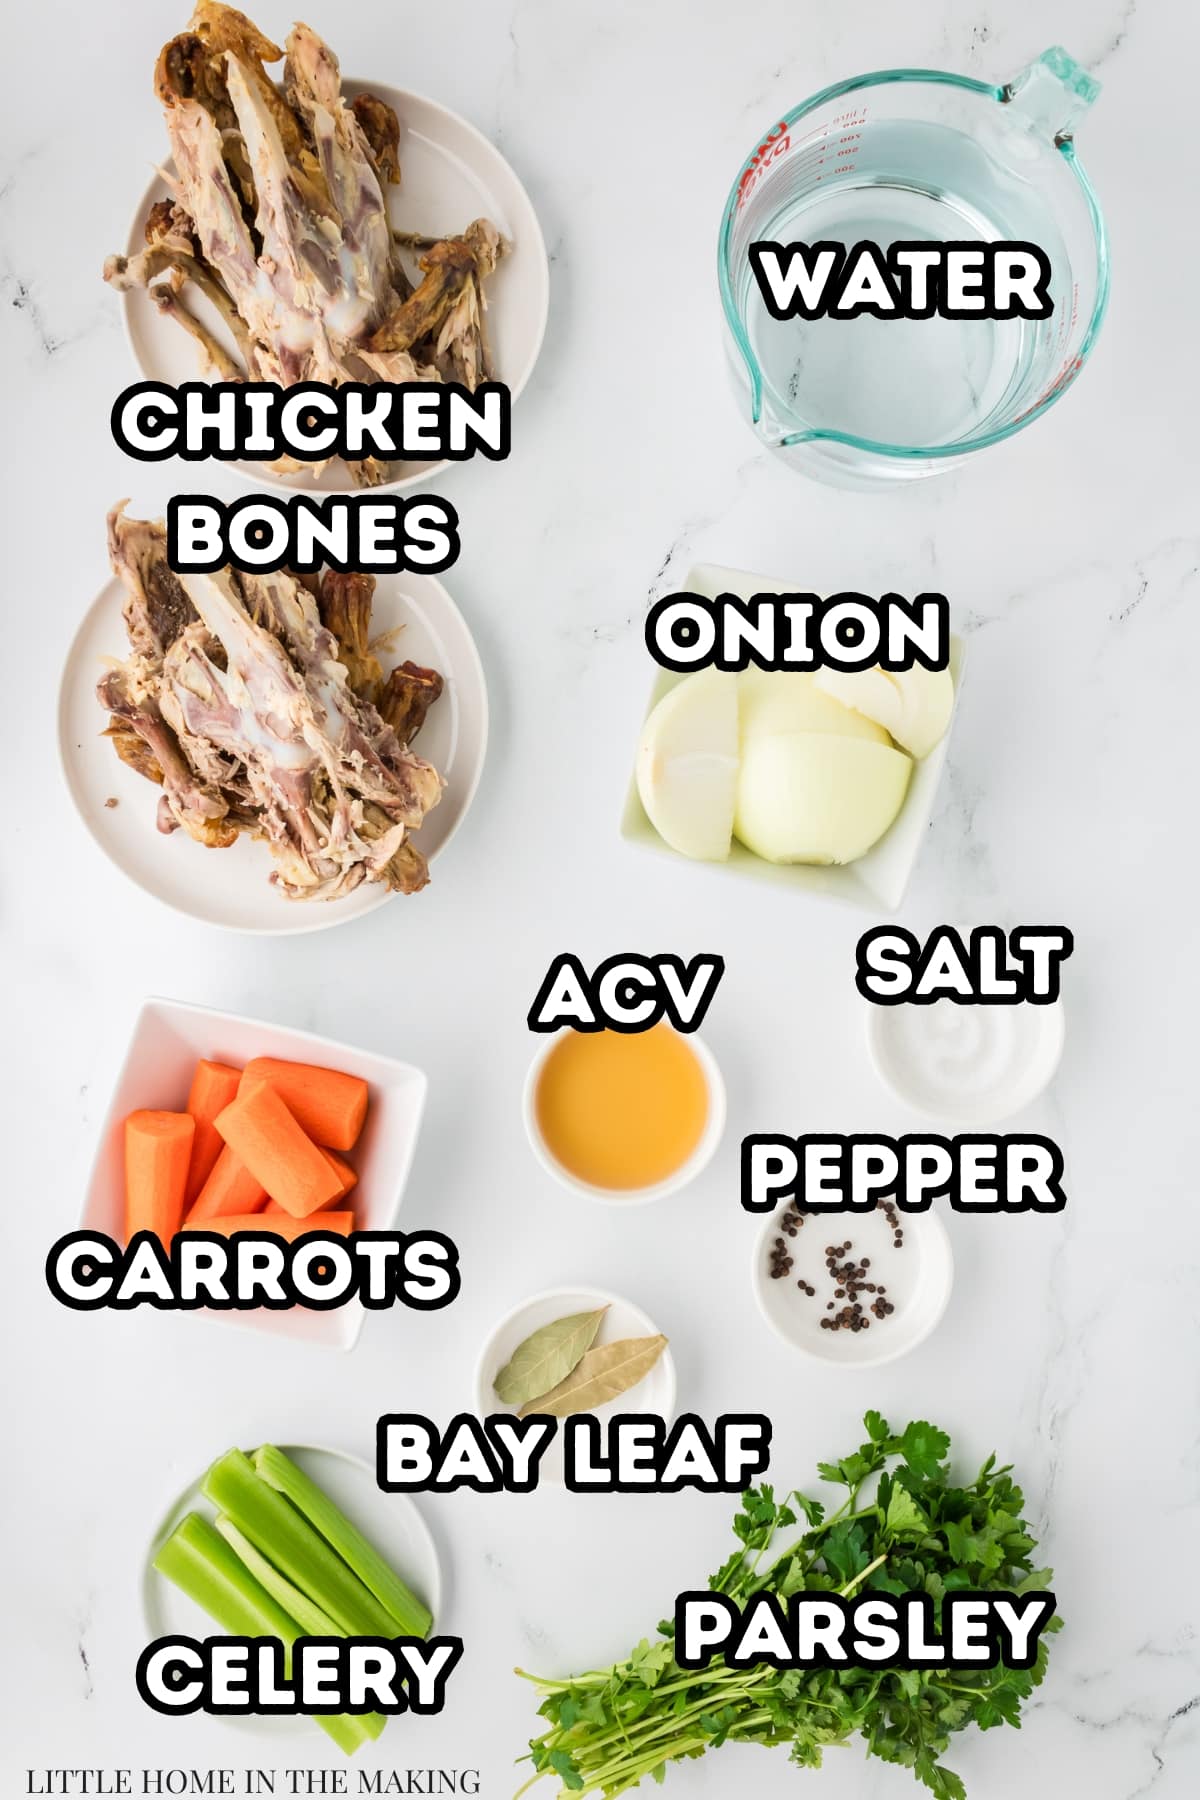 The ingredients needed to make bone broth: bones, carrots, celery, bay leaf, parsley, onion, salt, pepper, acv, and water.